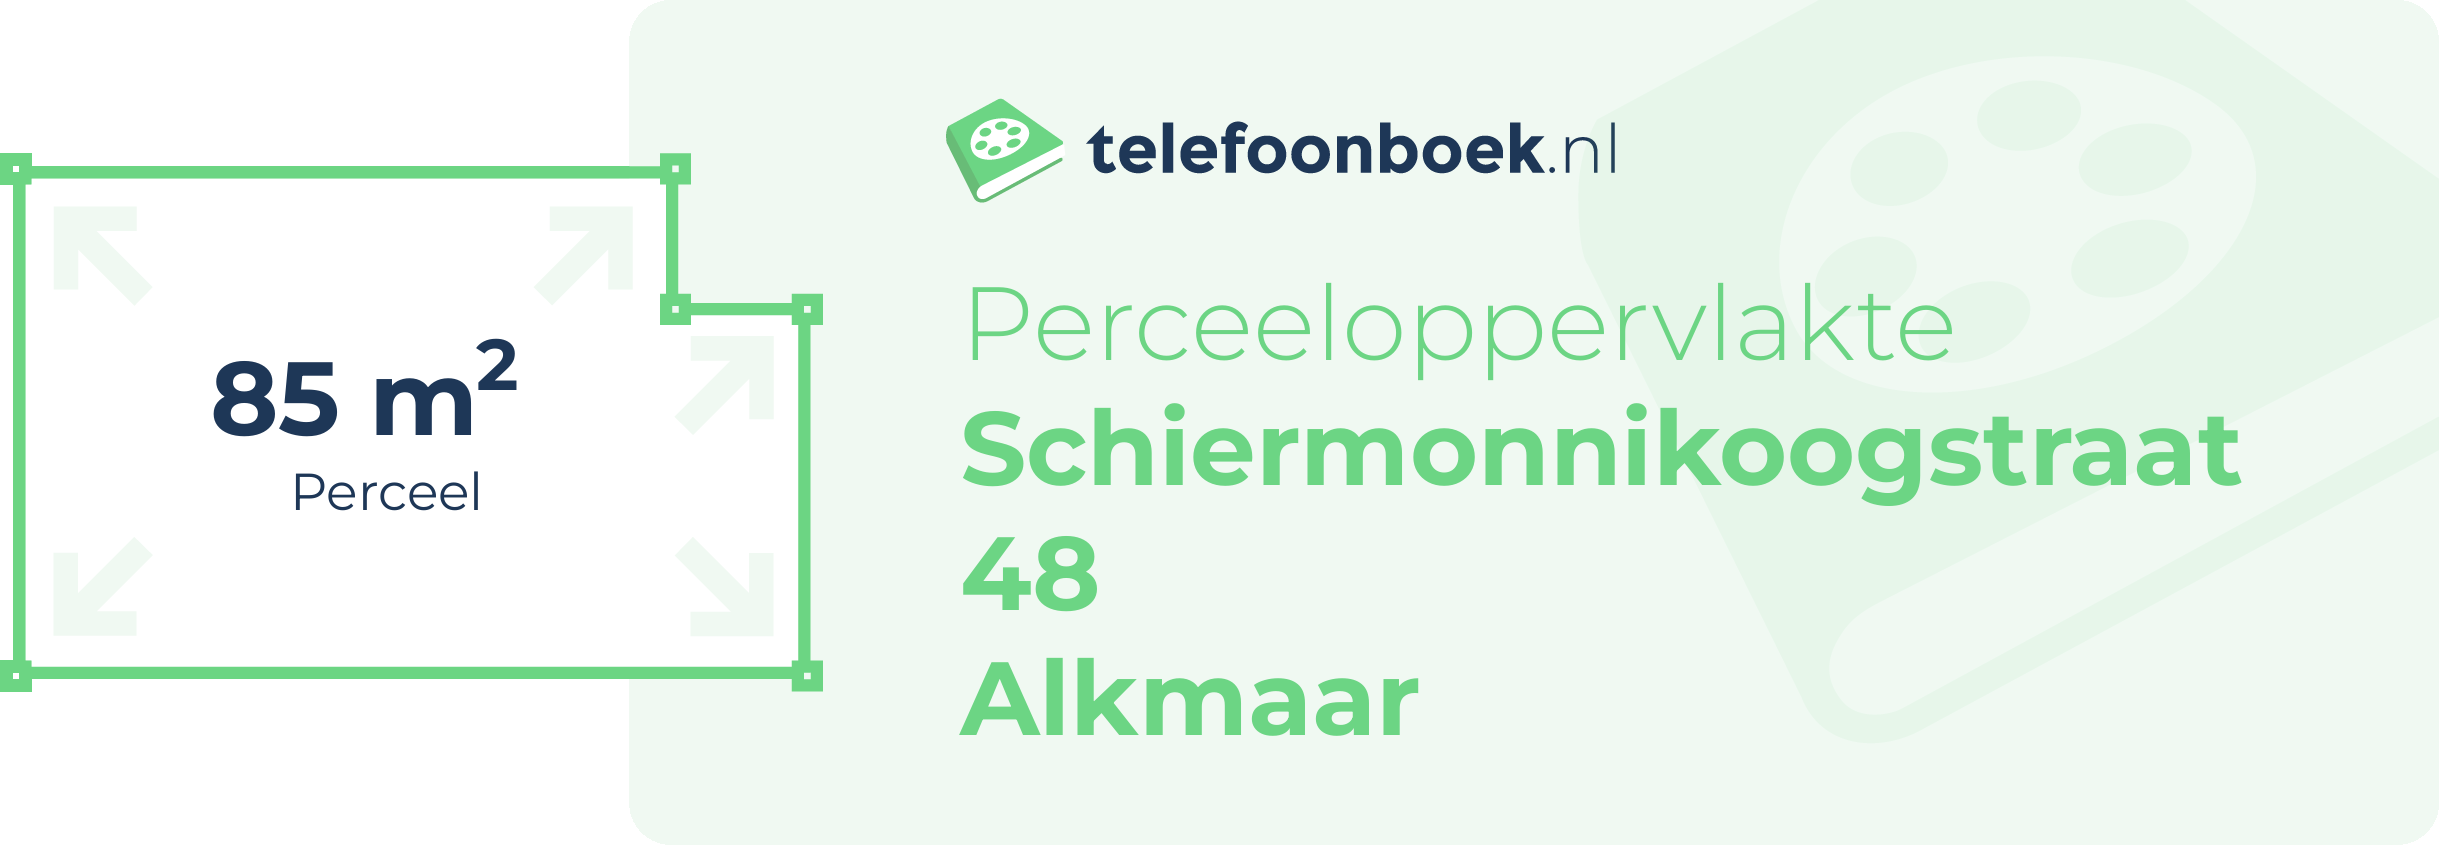 Perceeloppervlakte Schiermonnikoogstraat 48 Alkmaar